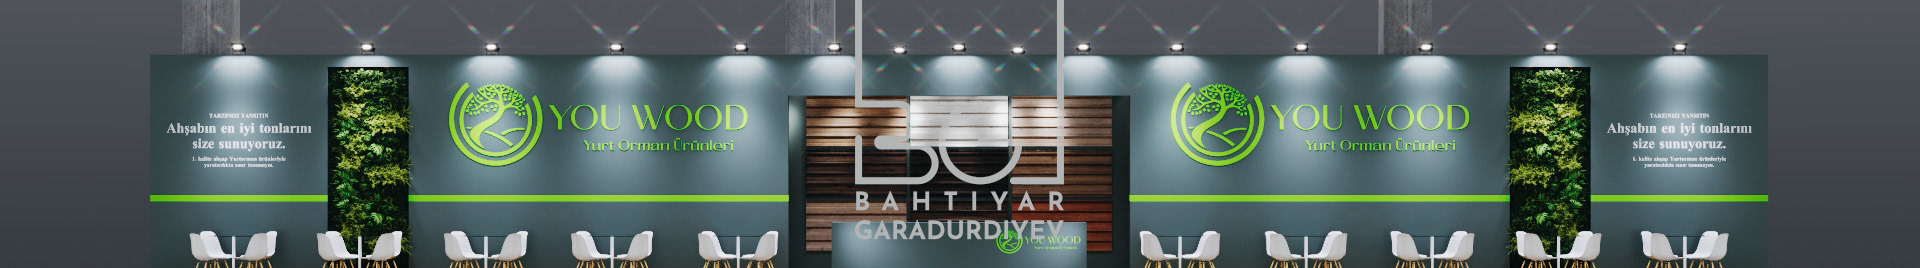 Banner de perfil de Bahtiyar Garadurdiyev